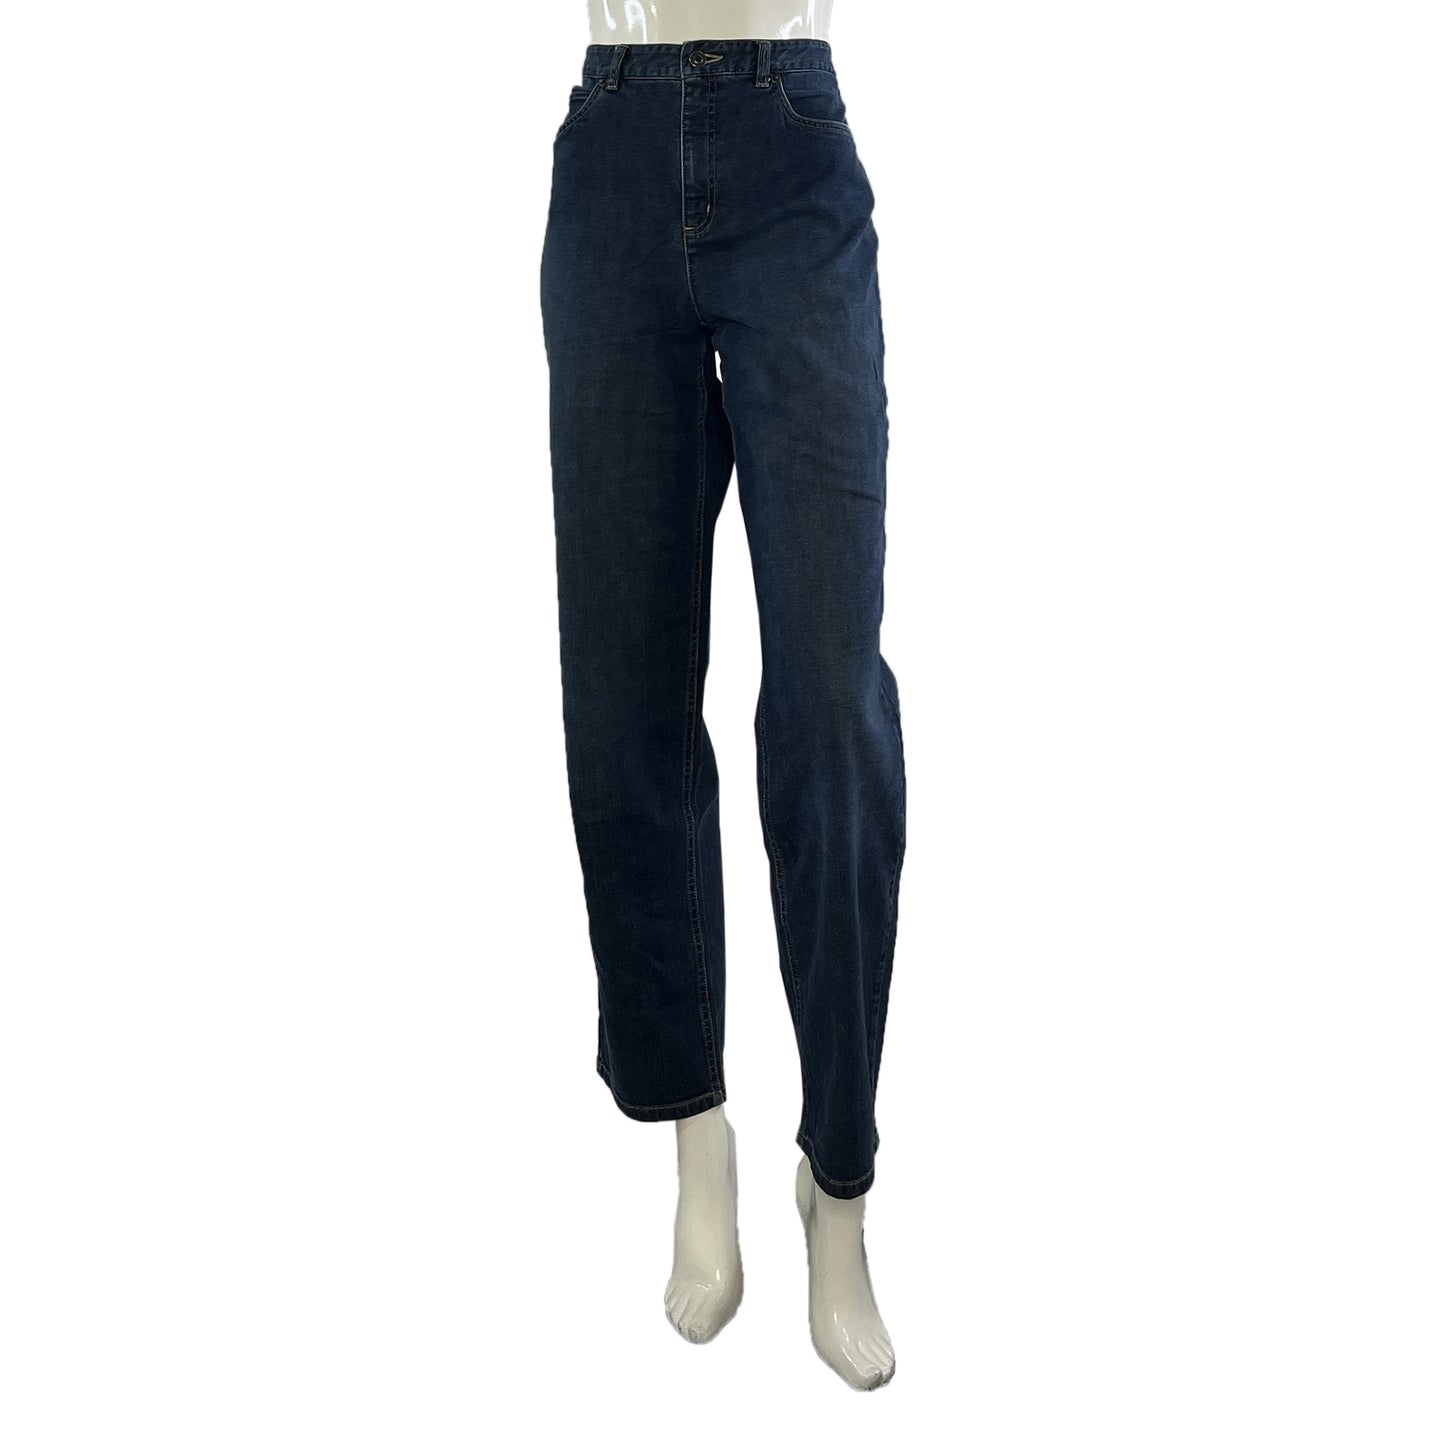 Talbots Denim Jeans Dark Blue Size 12 SKU 000423-9